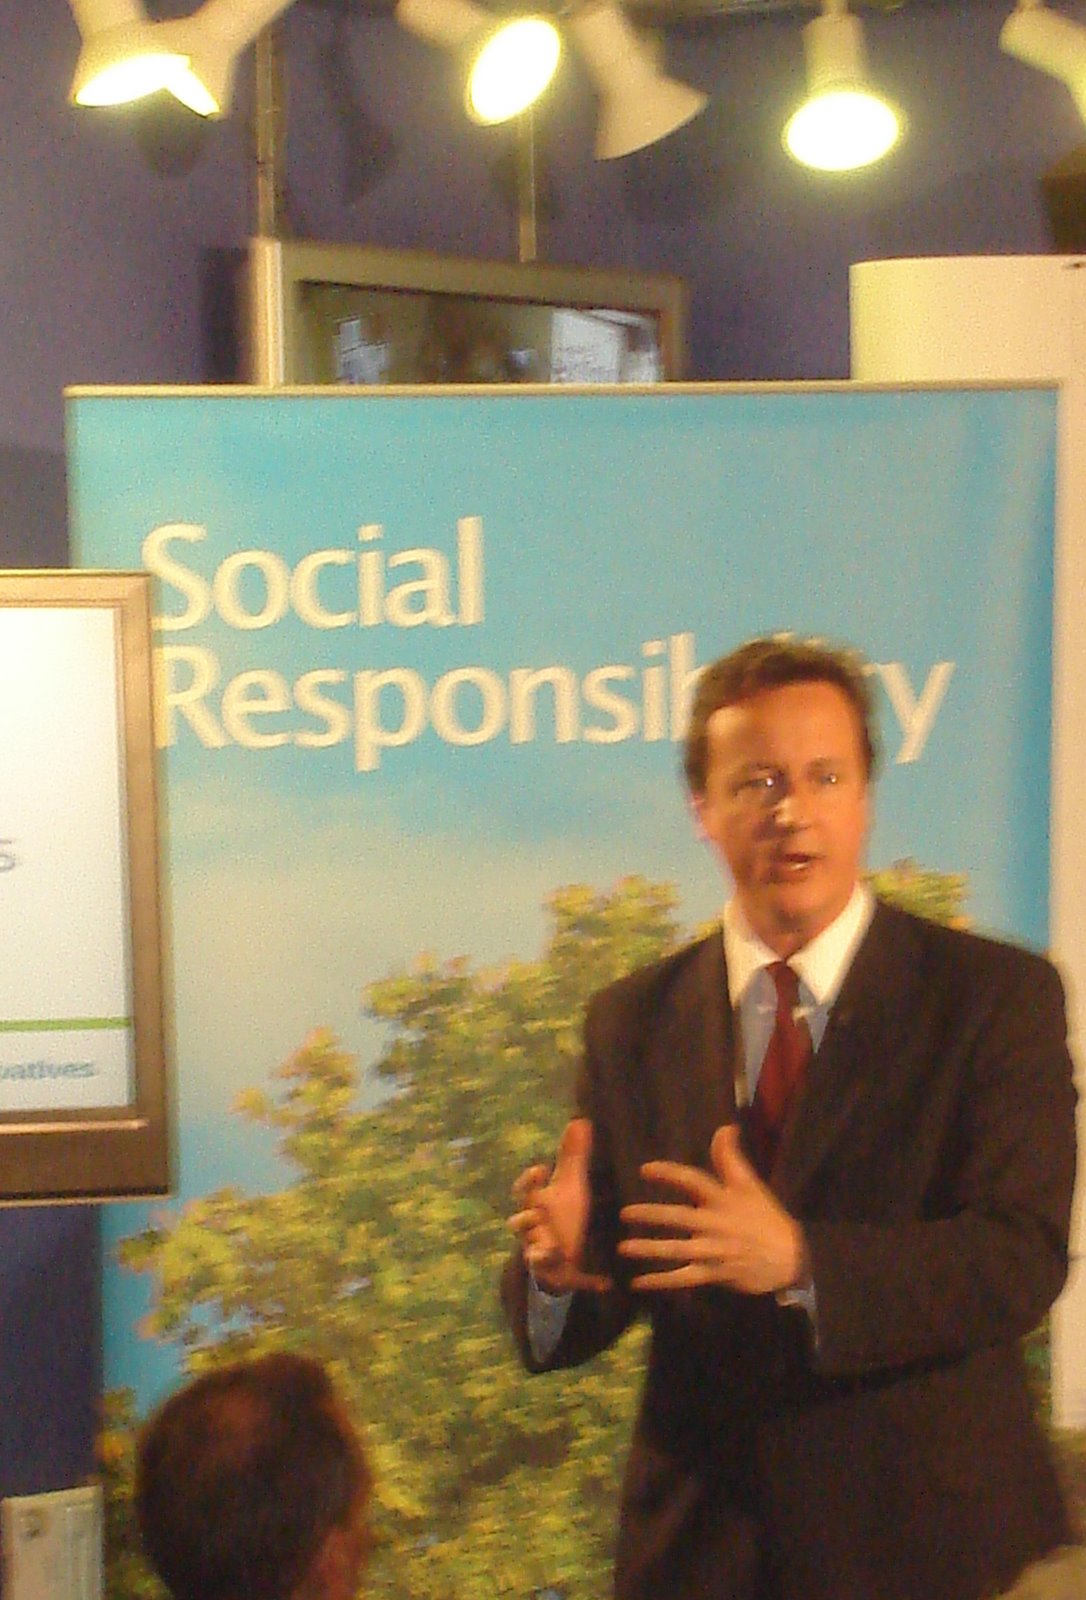 [David+Cameron+Social+Responsibility+copy.JPG]